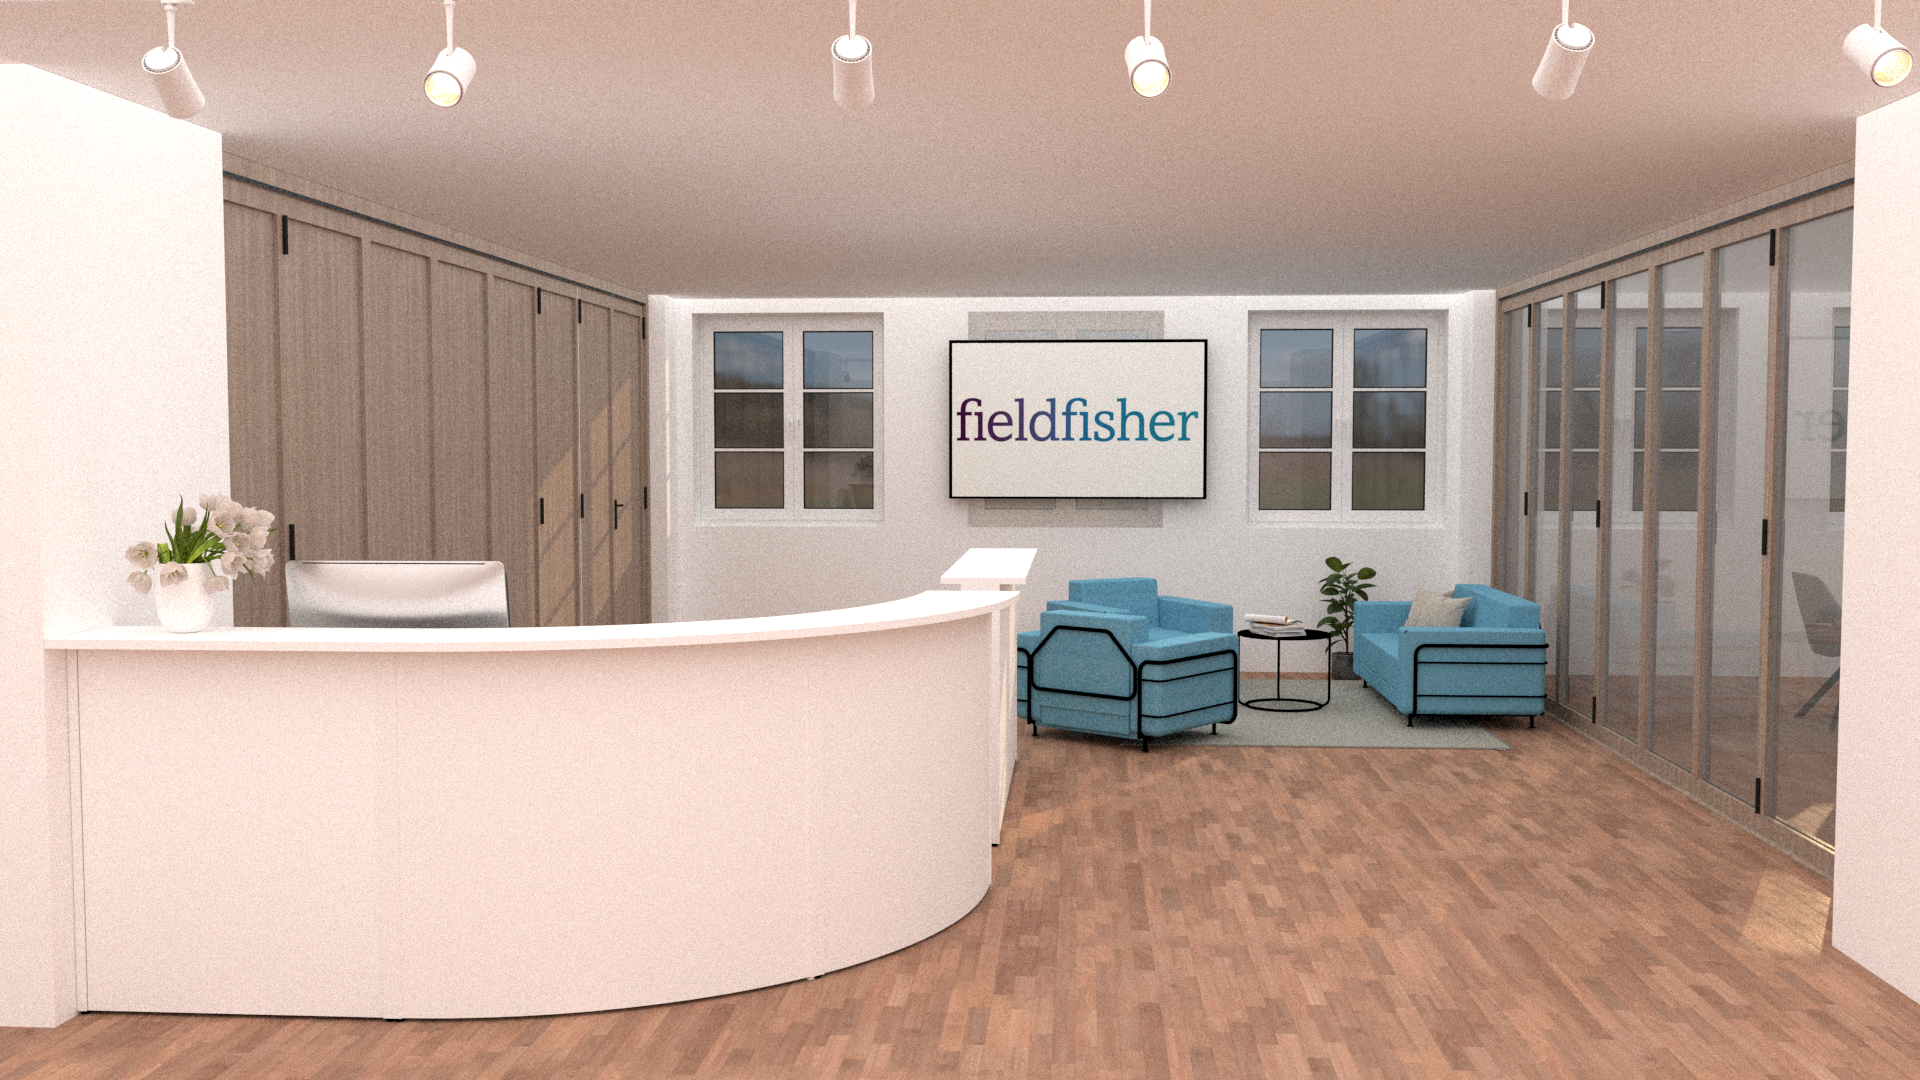 New office for Fieldfisher lawyers at Stephansplatz